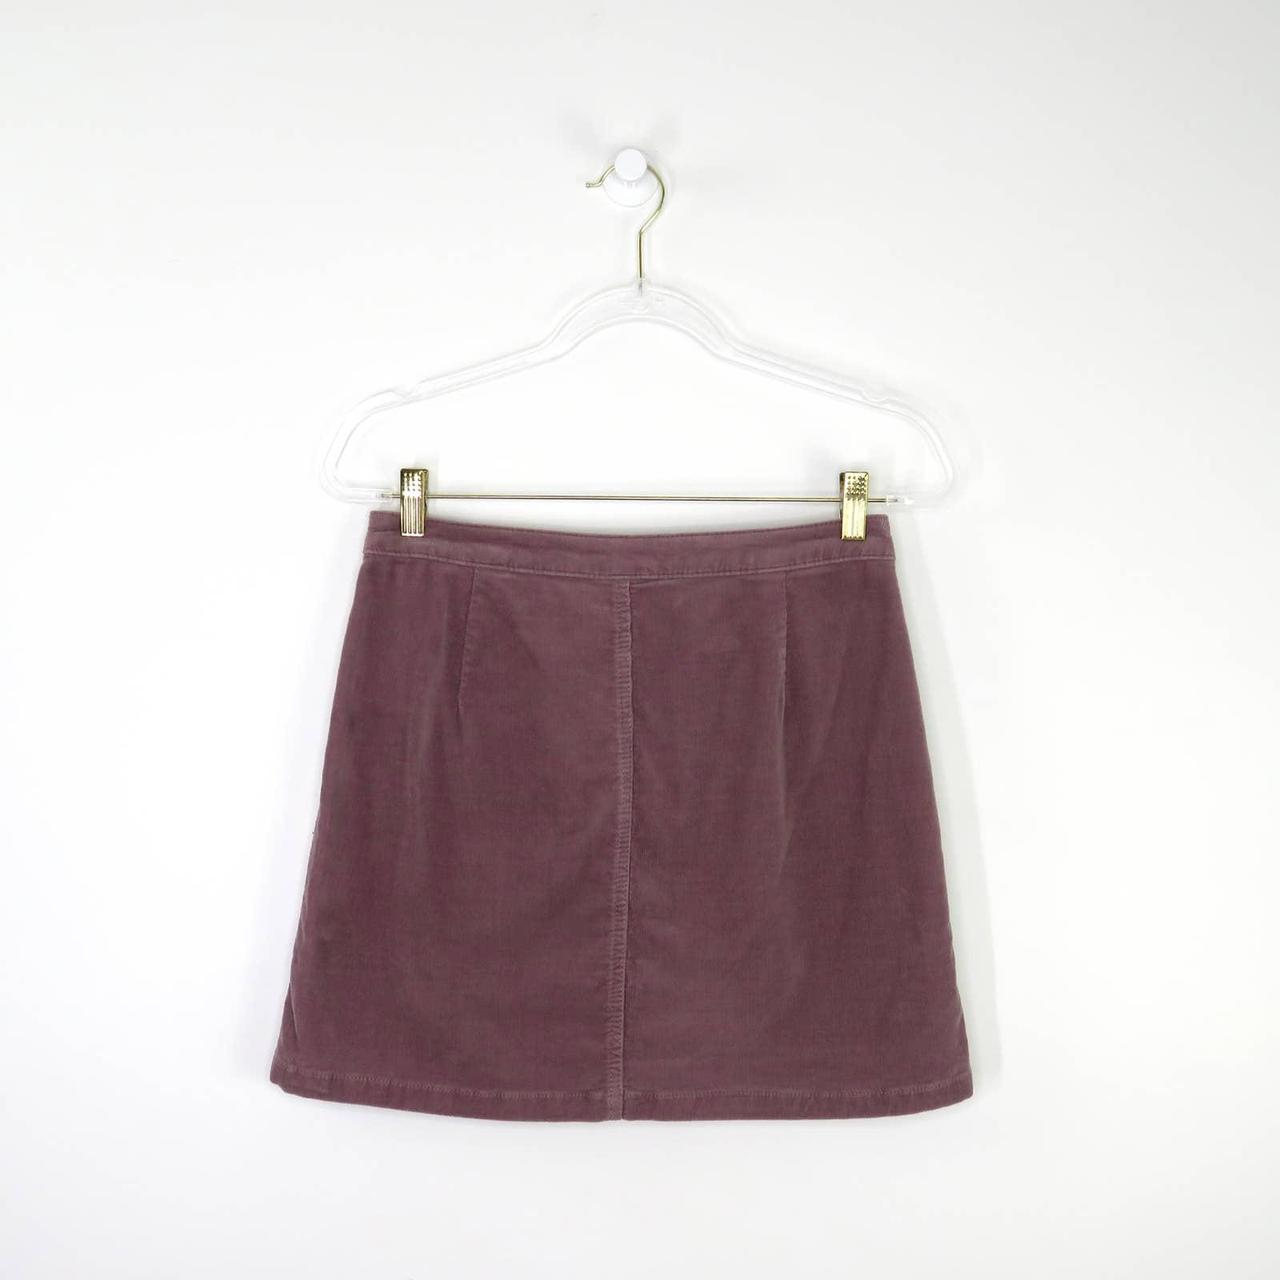 Product Image 3 - Mossimo Purple Corduroy Skirt. Super